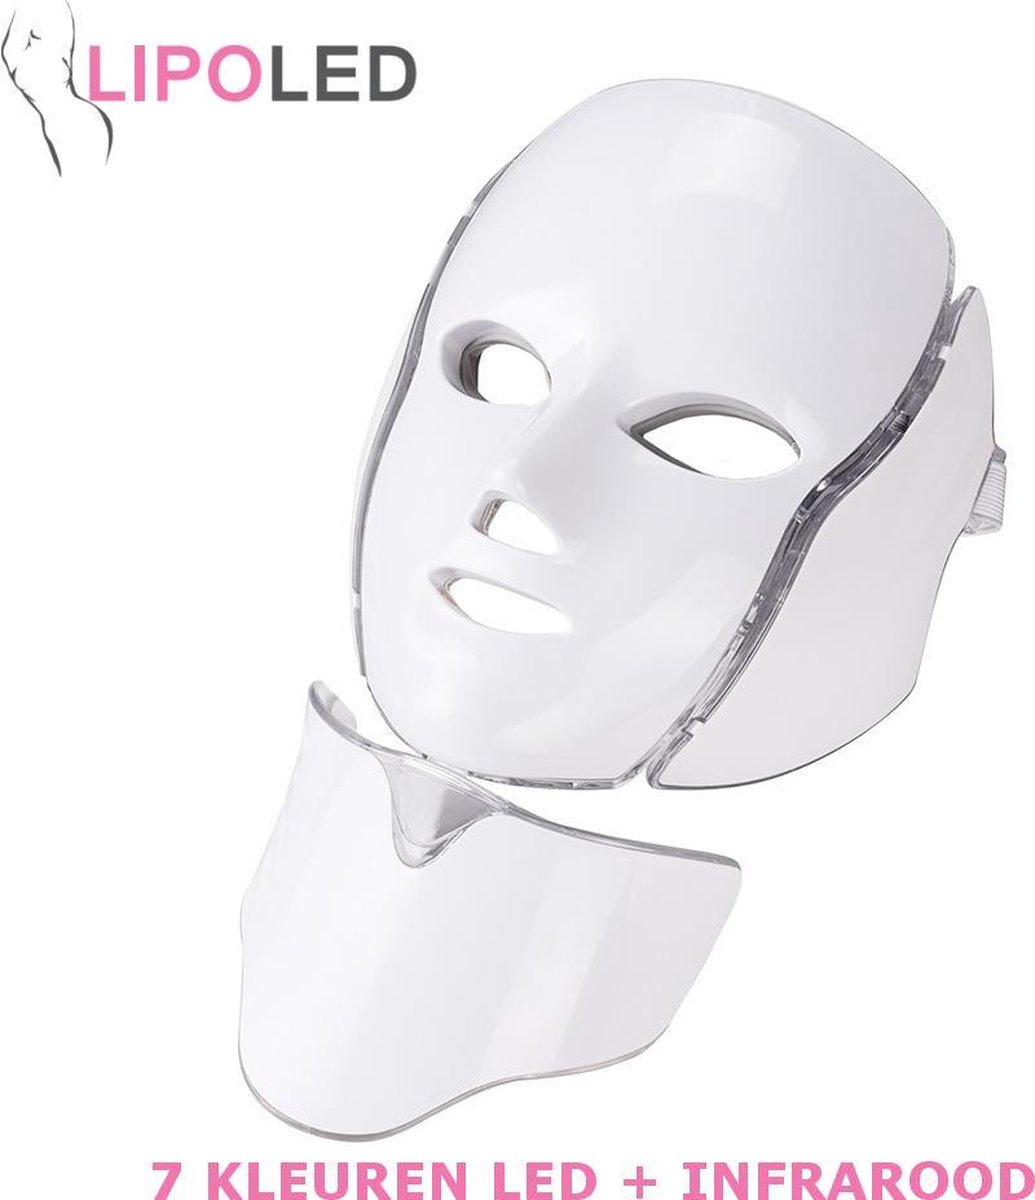 LED Masker gezicht en hals - 7 kleuren + Infrarood!